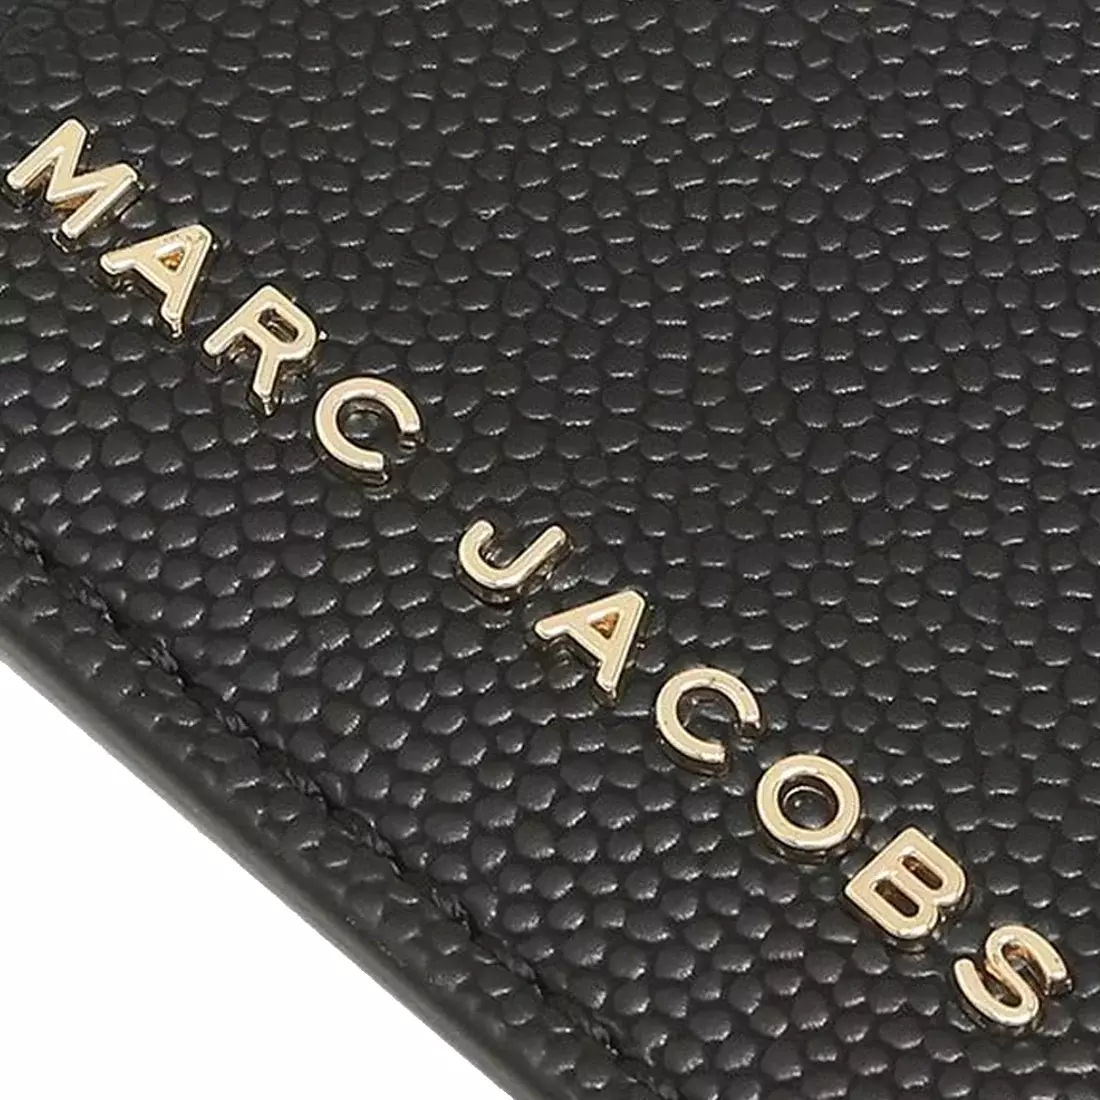 570252-Marc-Jacobs-Leather-Lanyard-ID-Holder-Black-M0016992-close-up-2_1800x1800.jpg